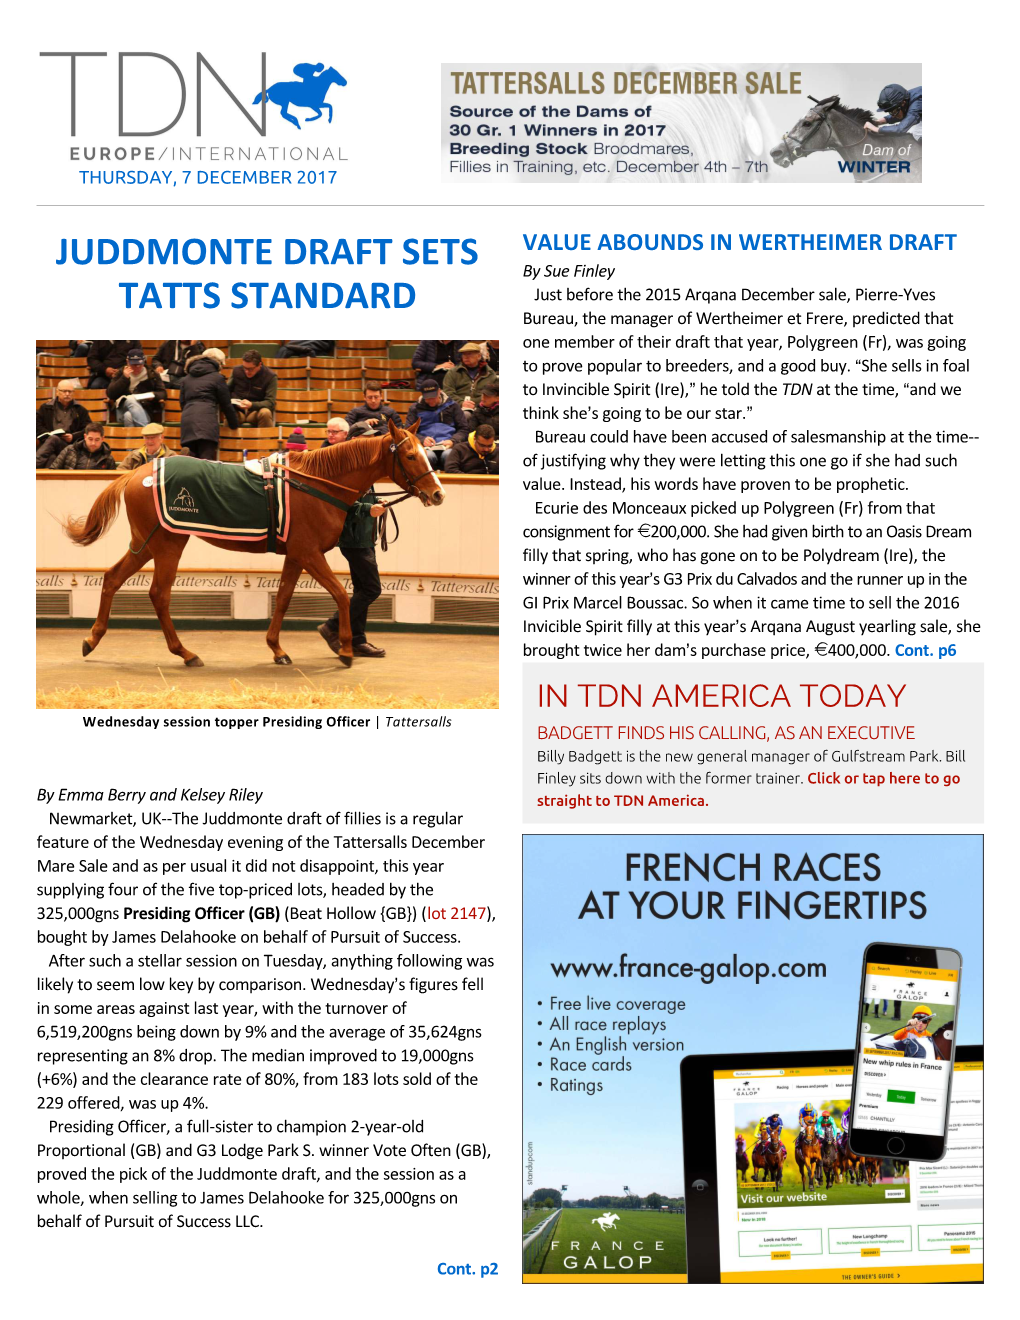 Juddmonte Draft Sets Tatts Standard